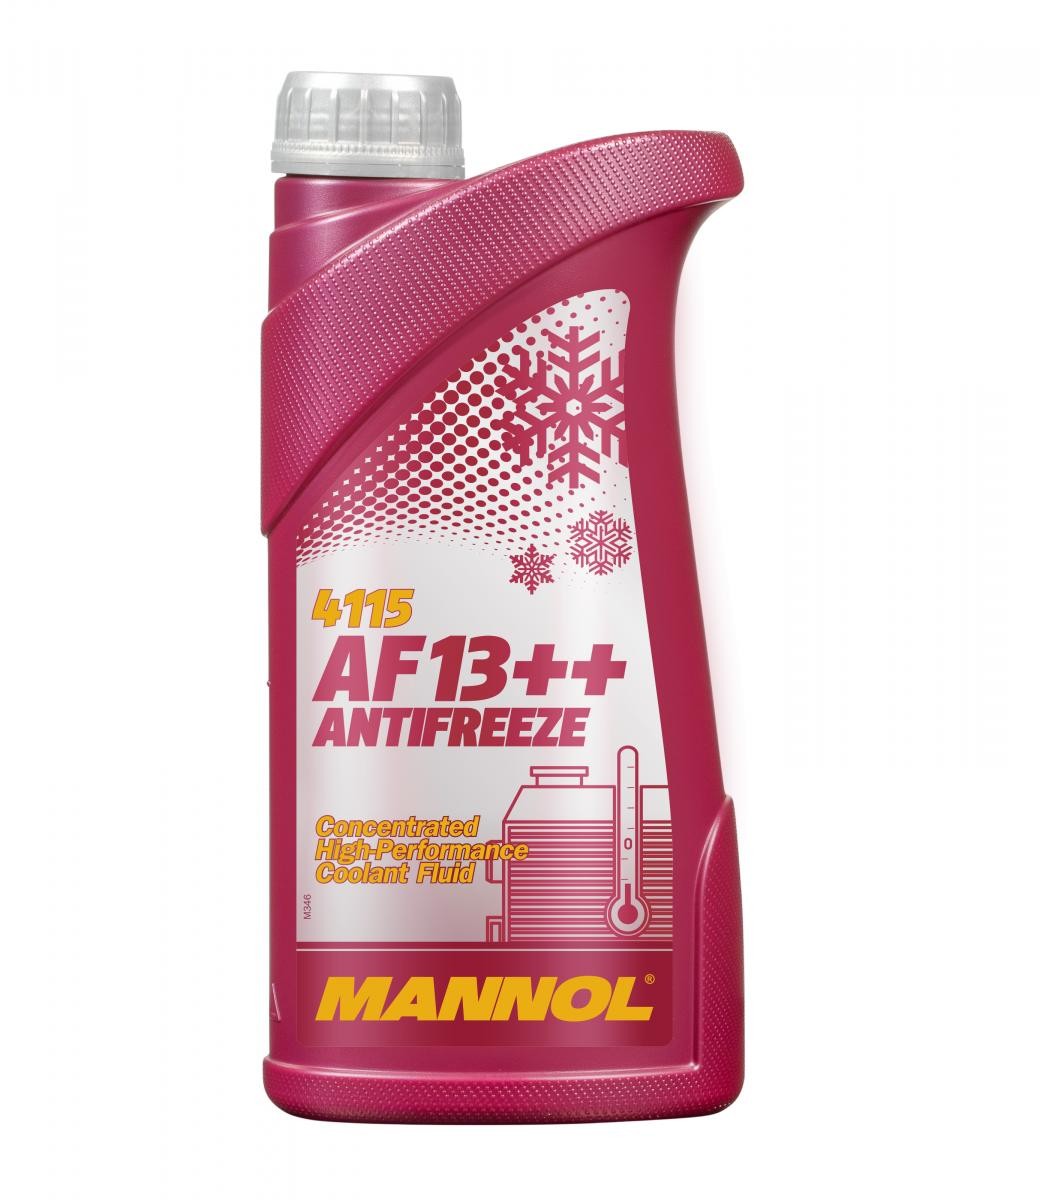 krafft Anticongelante Coche 40% G12 EVO Líquido Refrigerante Rosa 5 litros  : : Coche y moto